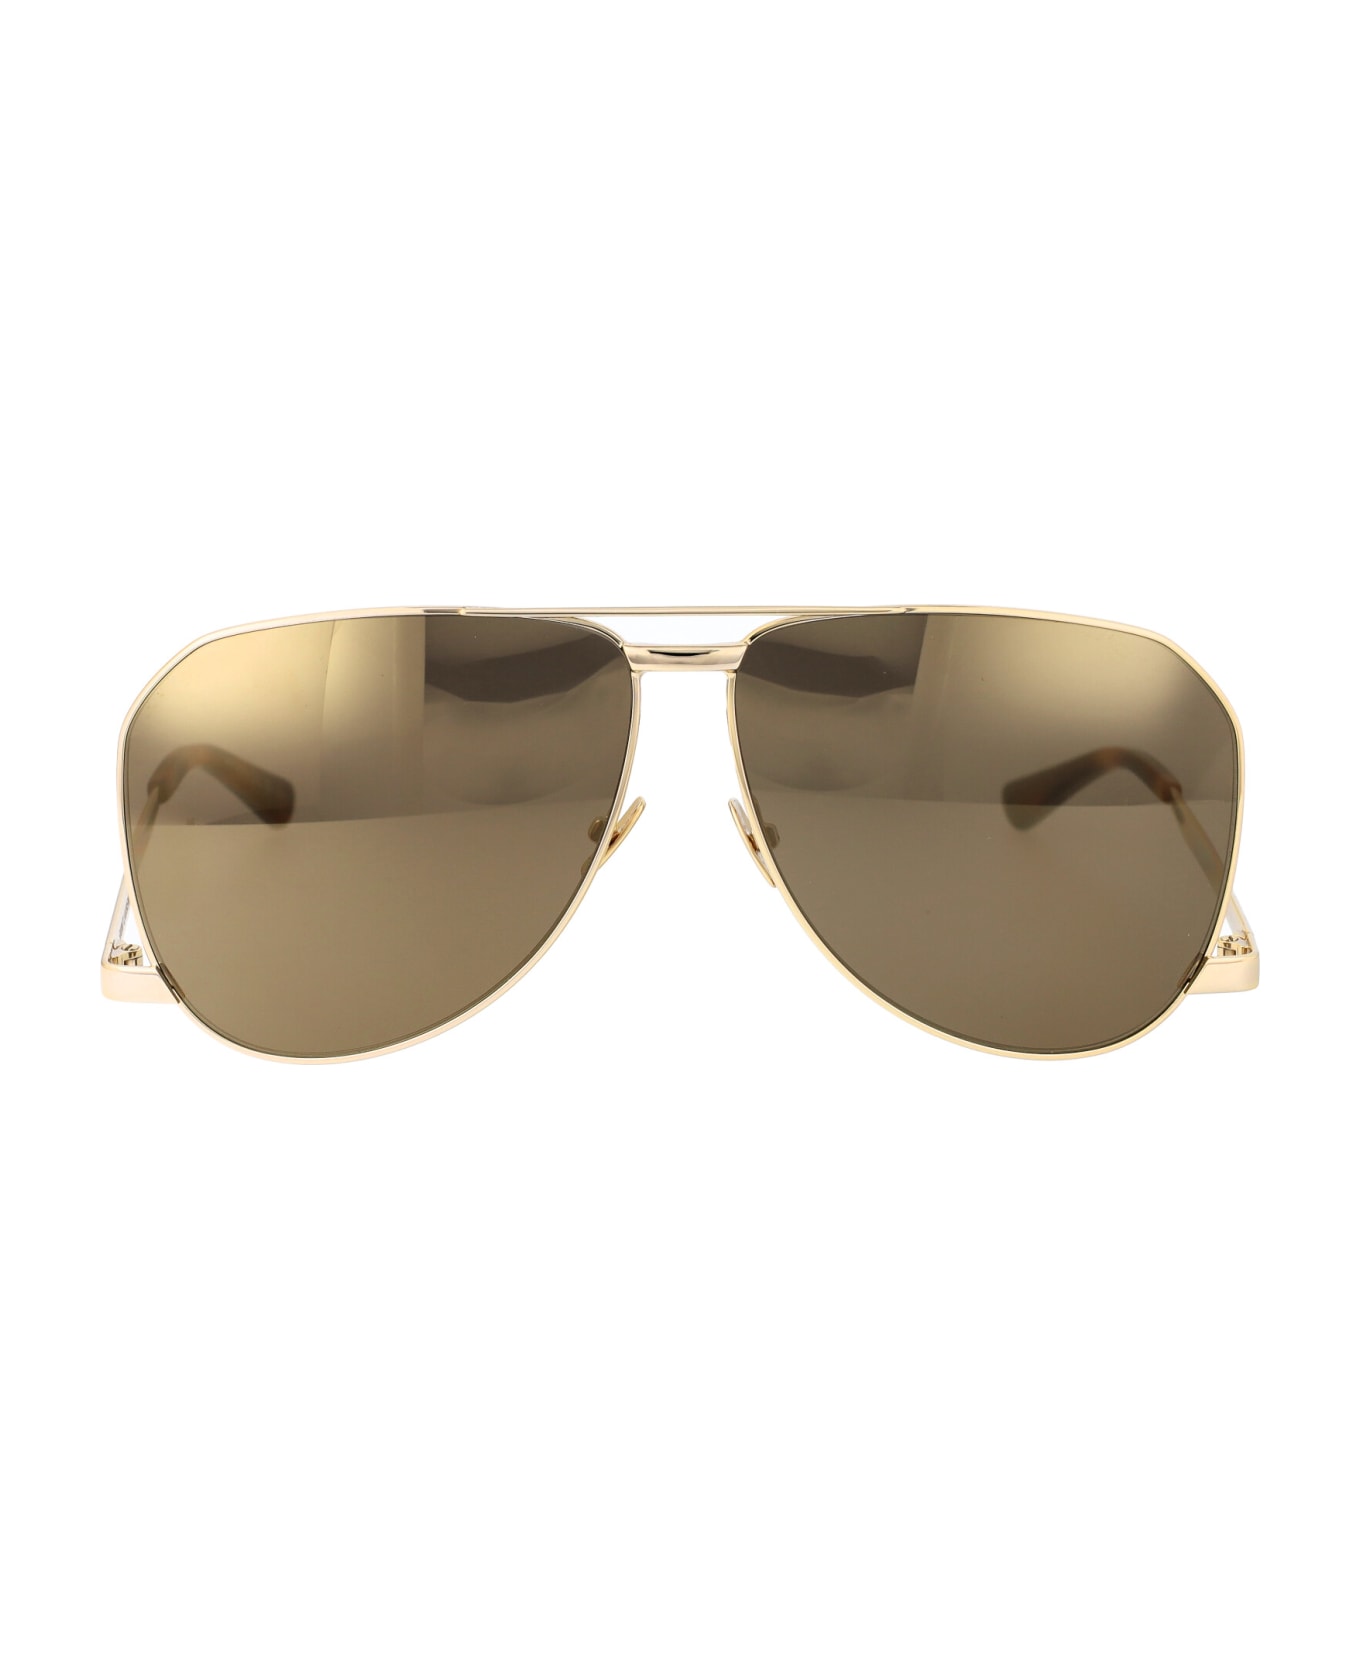 Saint Laurent Eyewear Sl 690 Dust Sunglasses - 004 GOLD GOLD BROWN